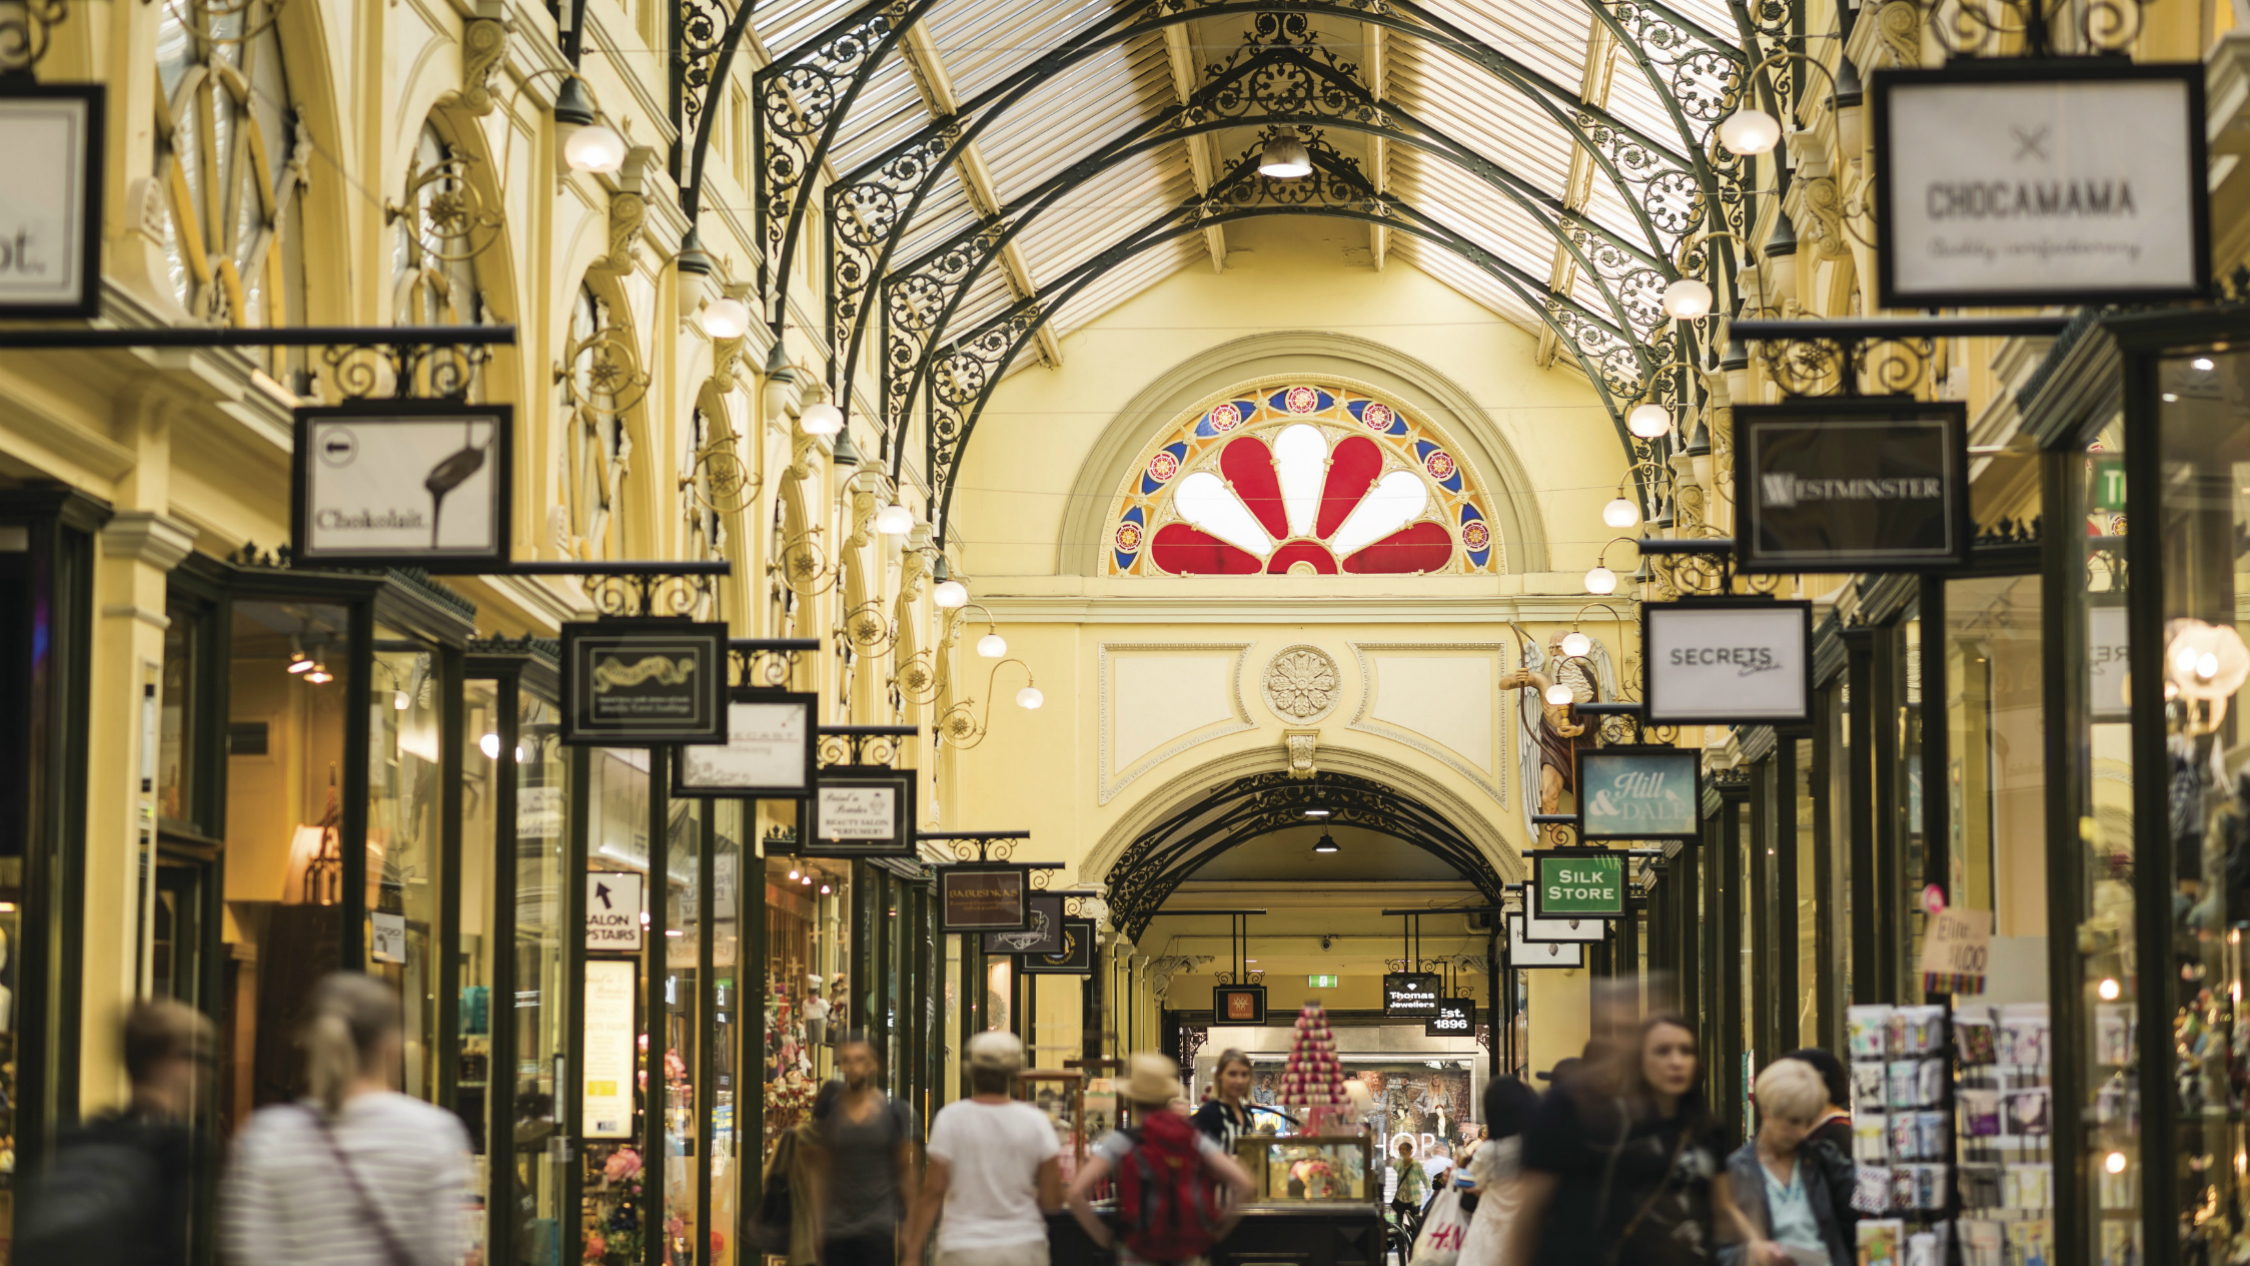 Melbourne’s laneways and arcades